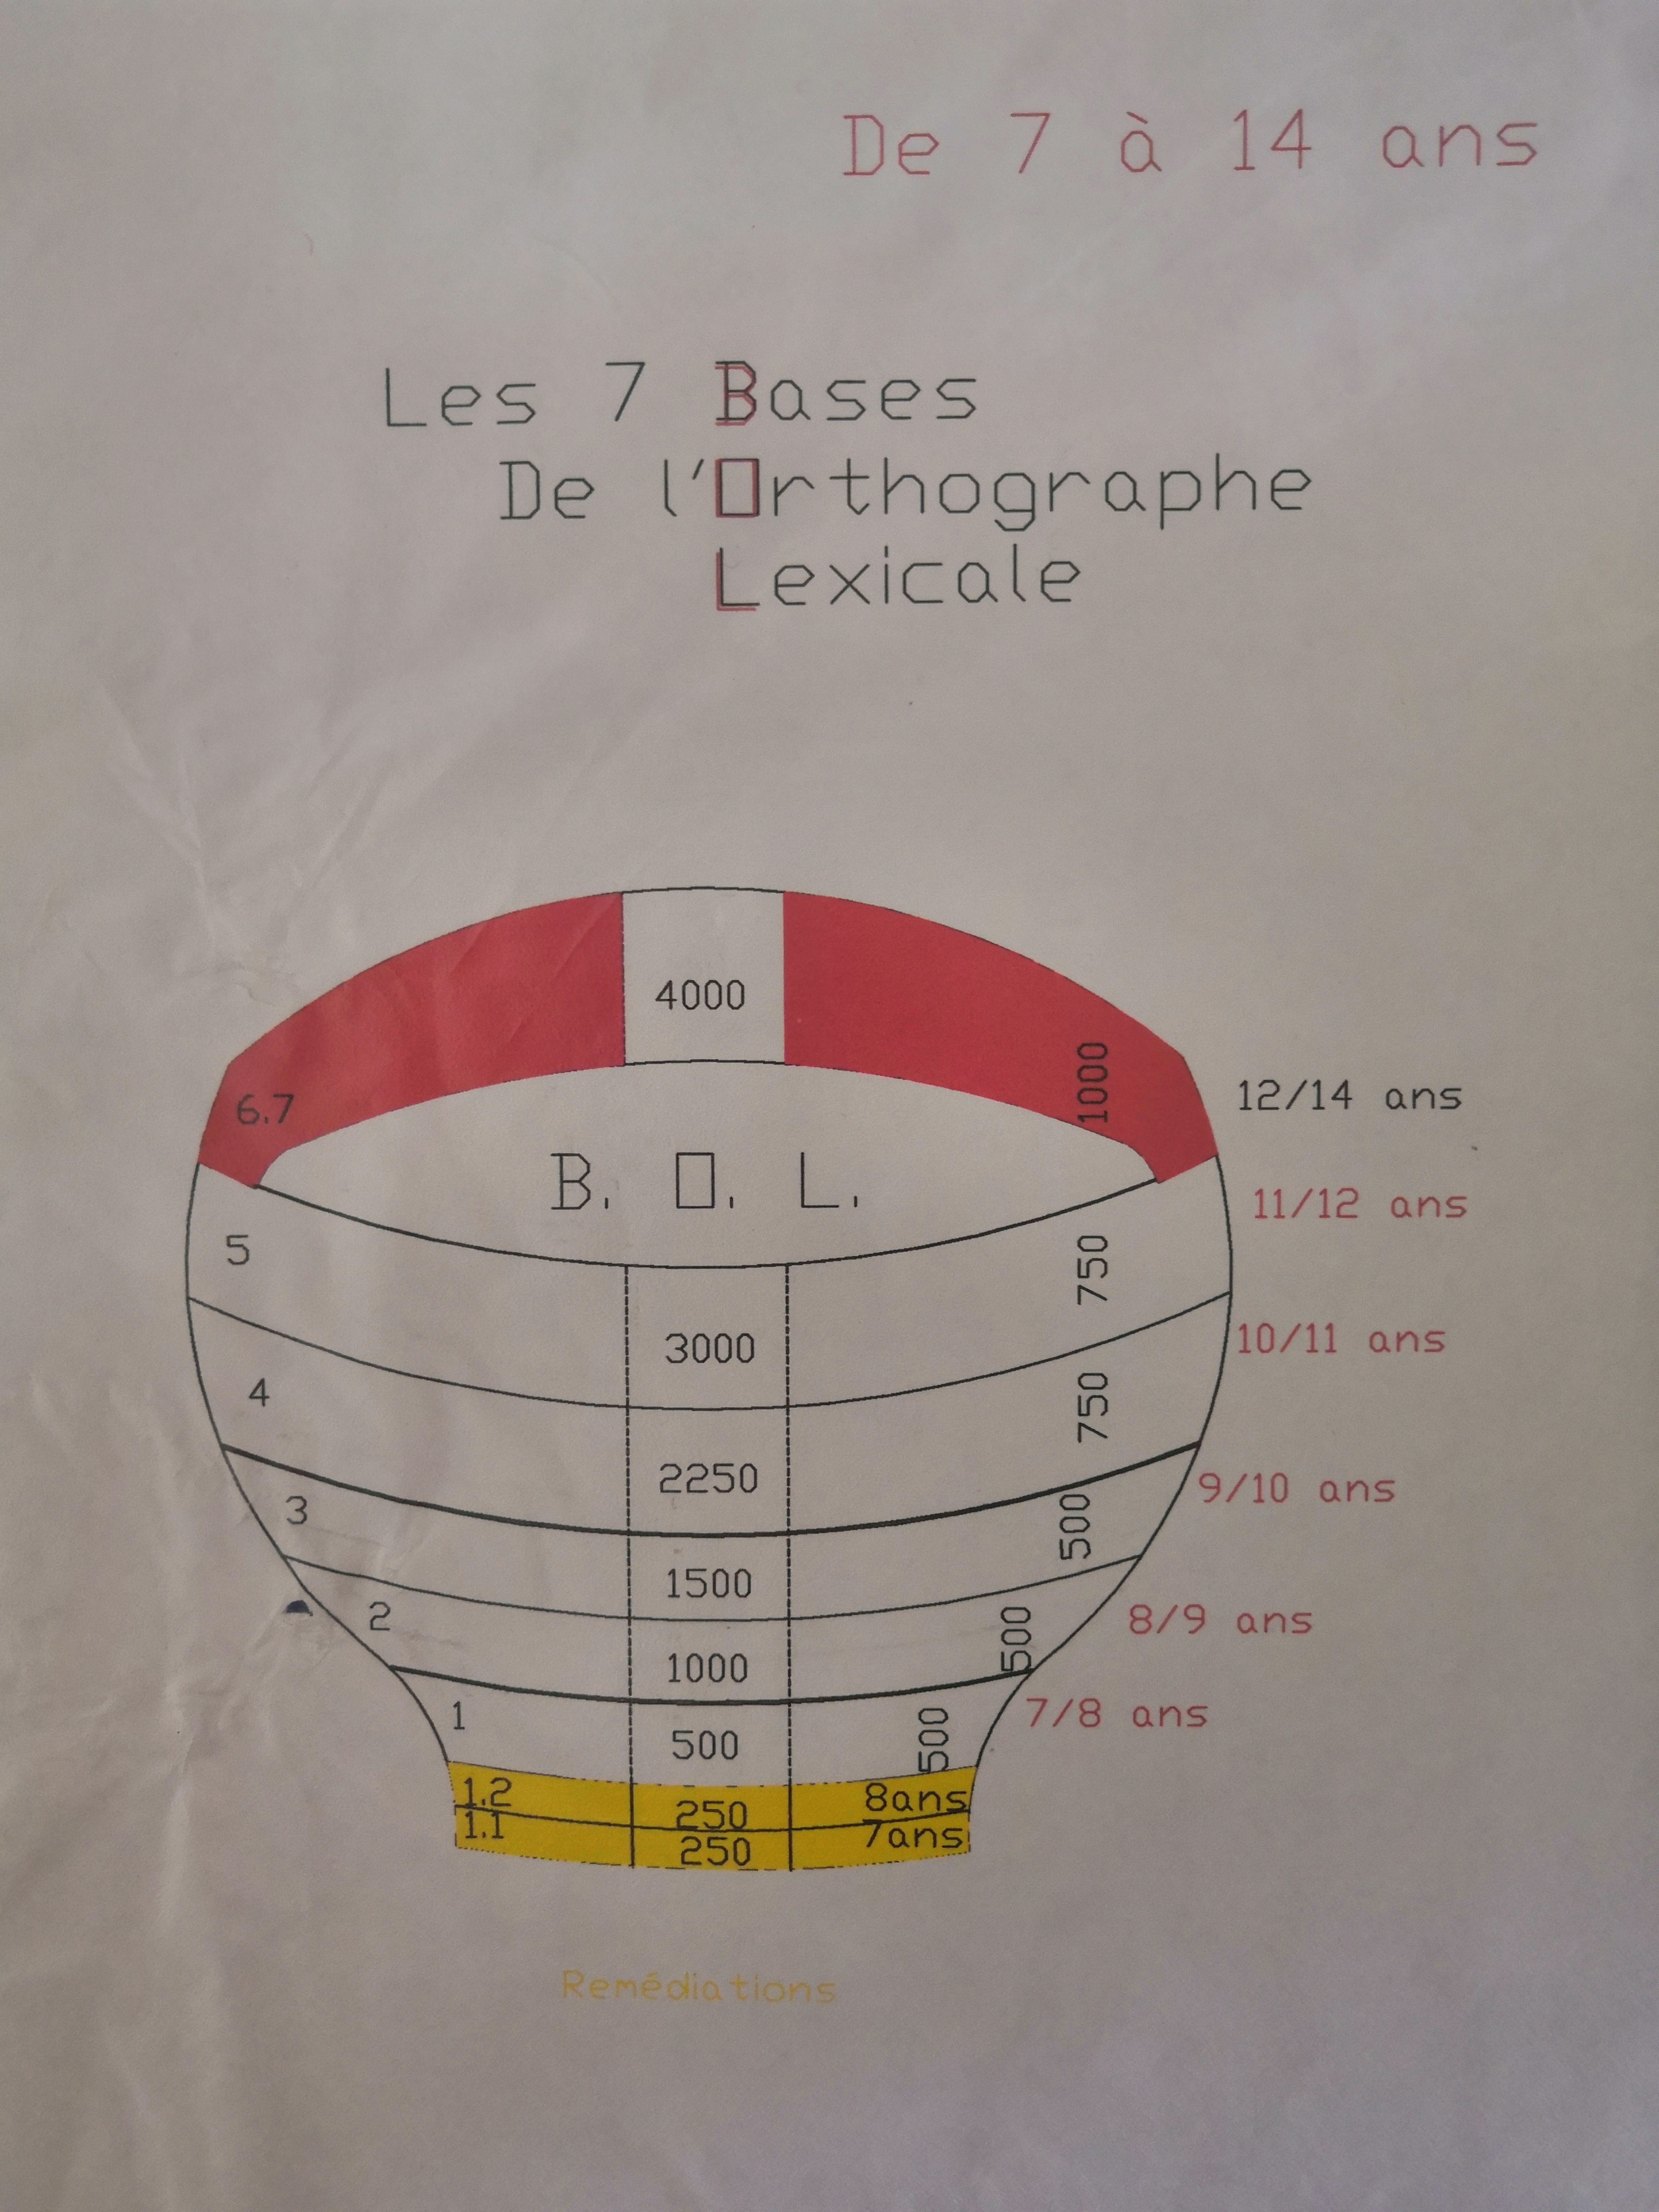 B.O.L. : Bases Orthographe Lexicale